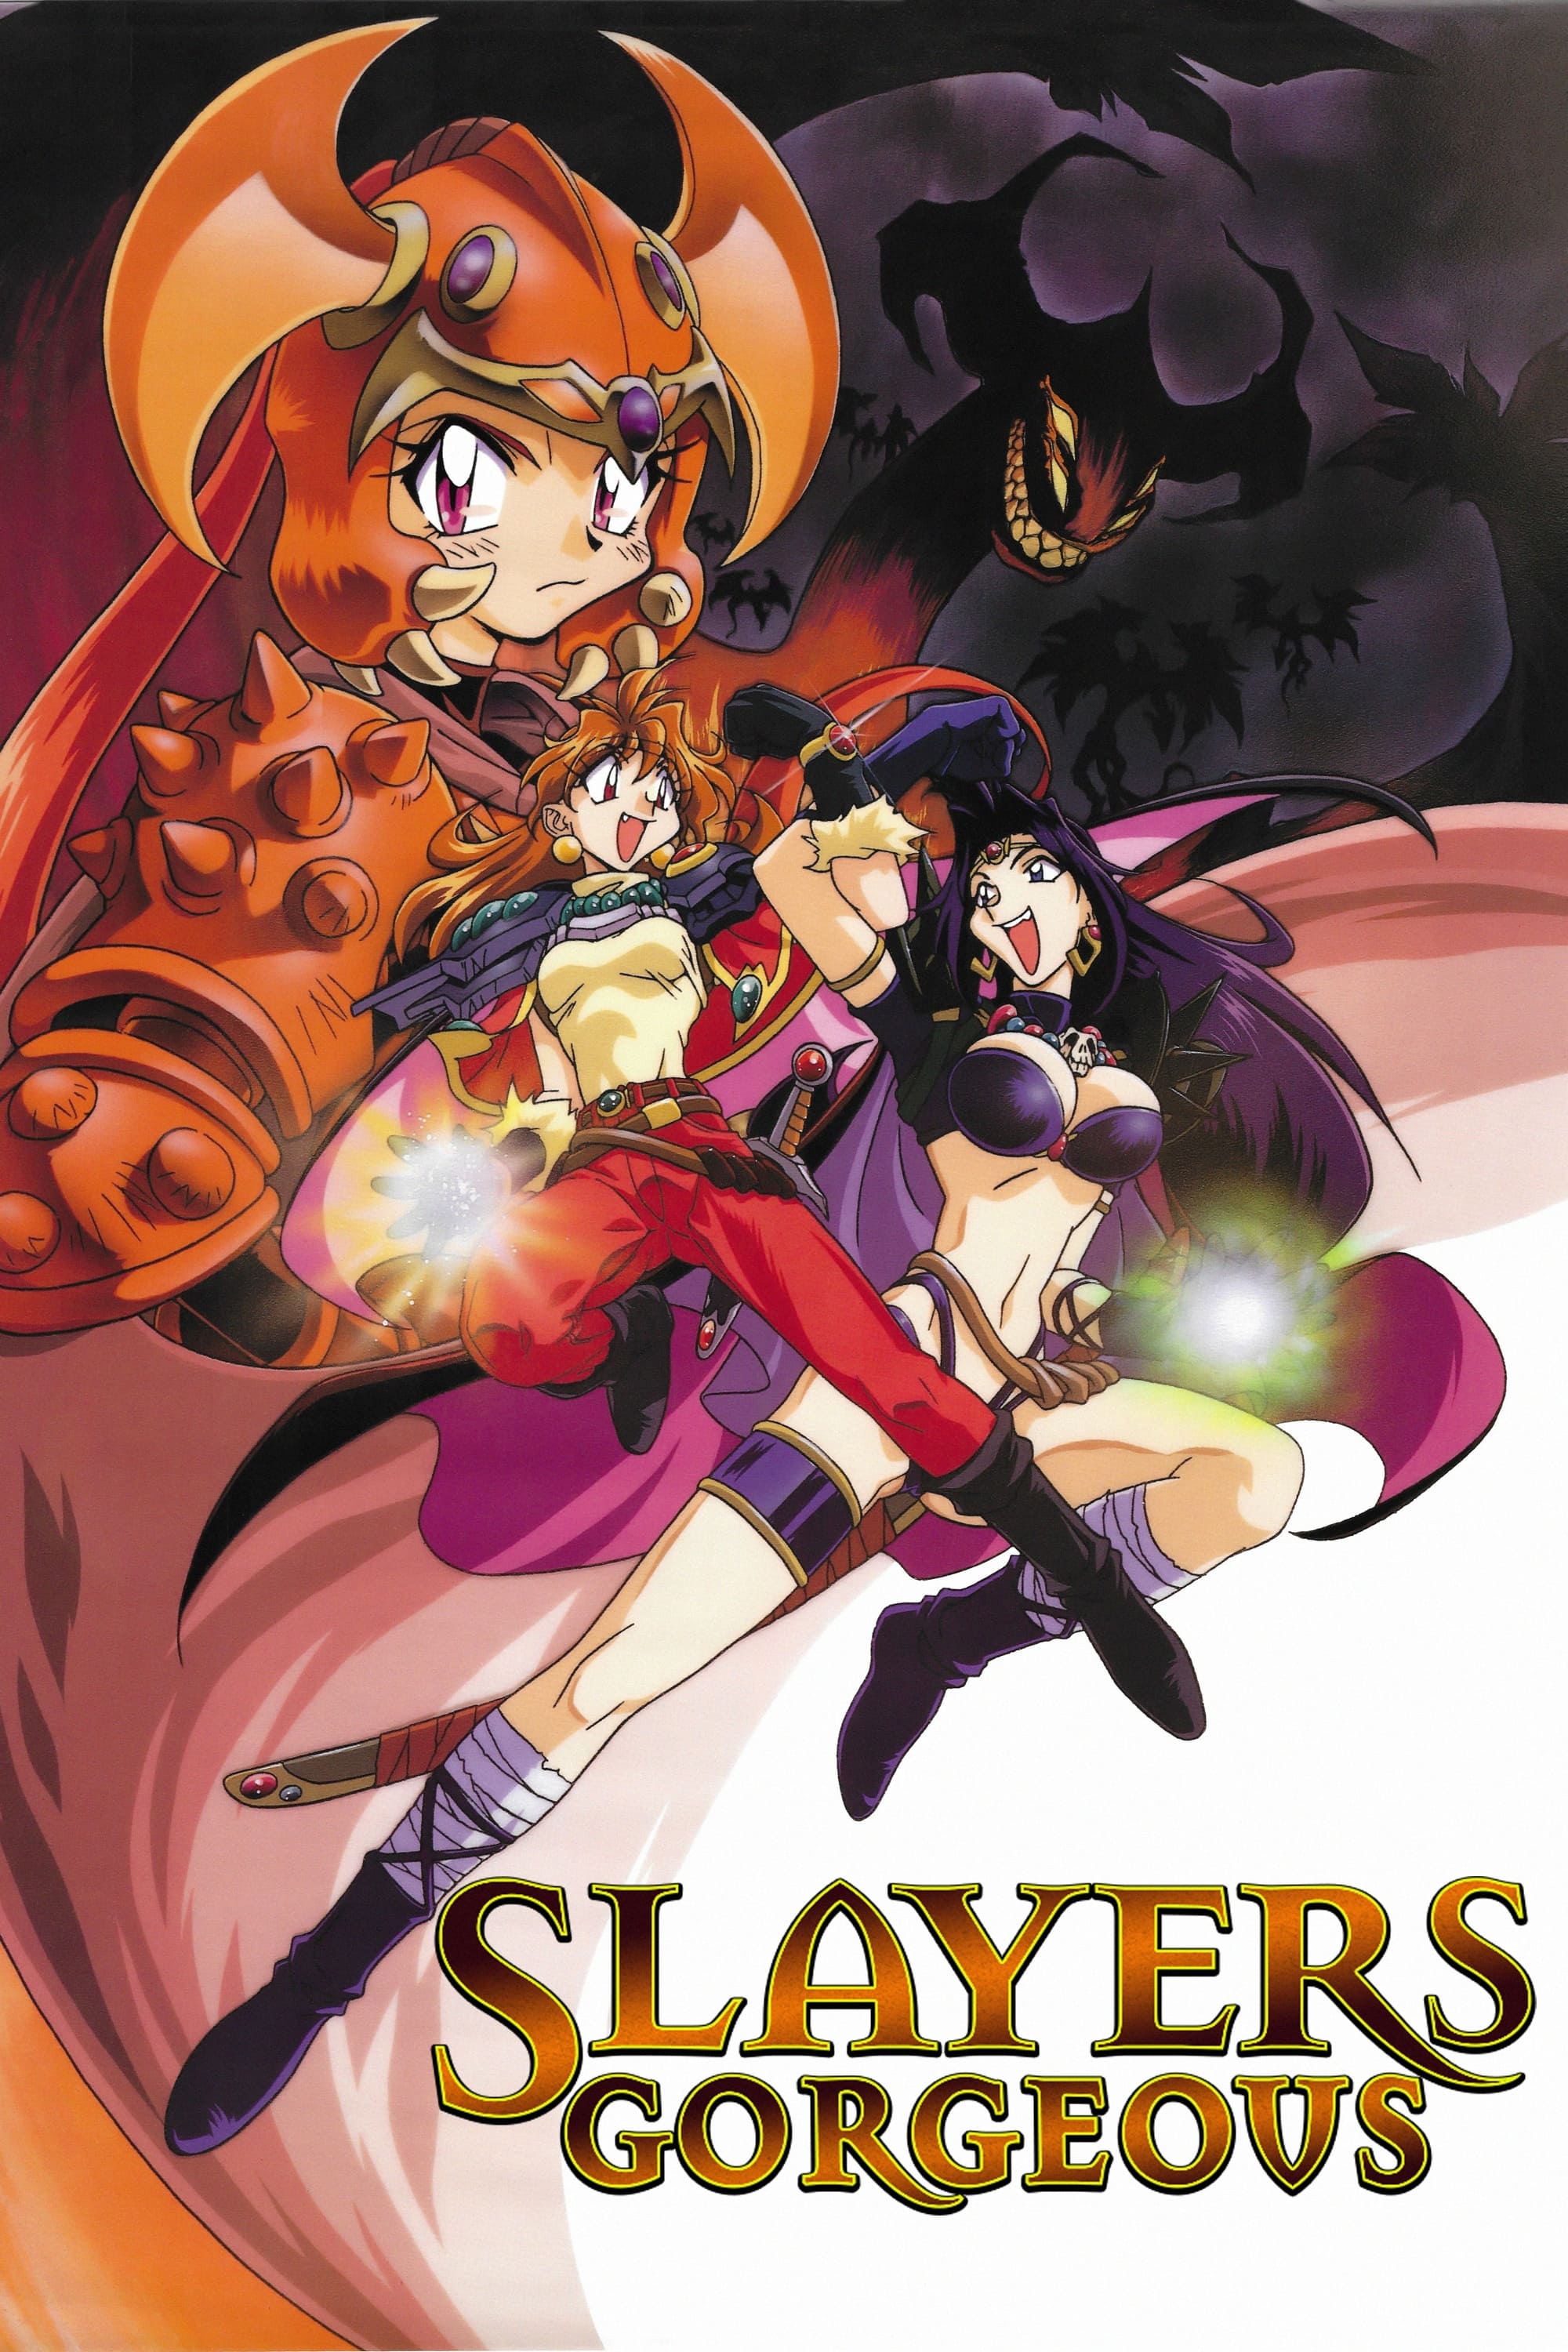 Slayers Gorgeous (1998)